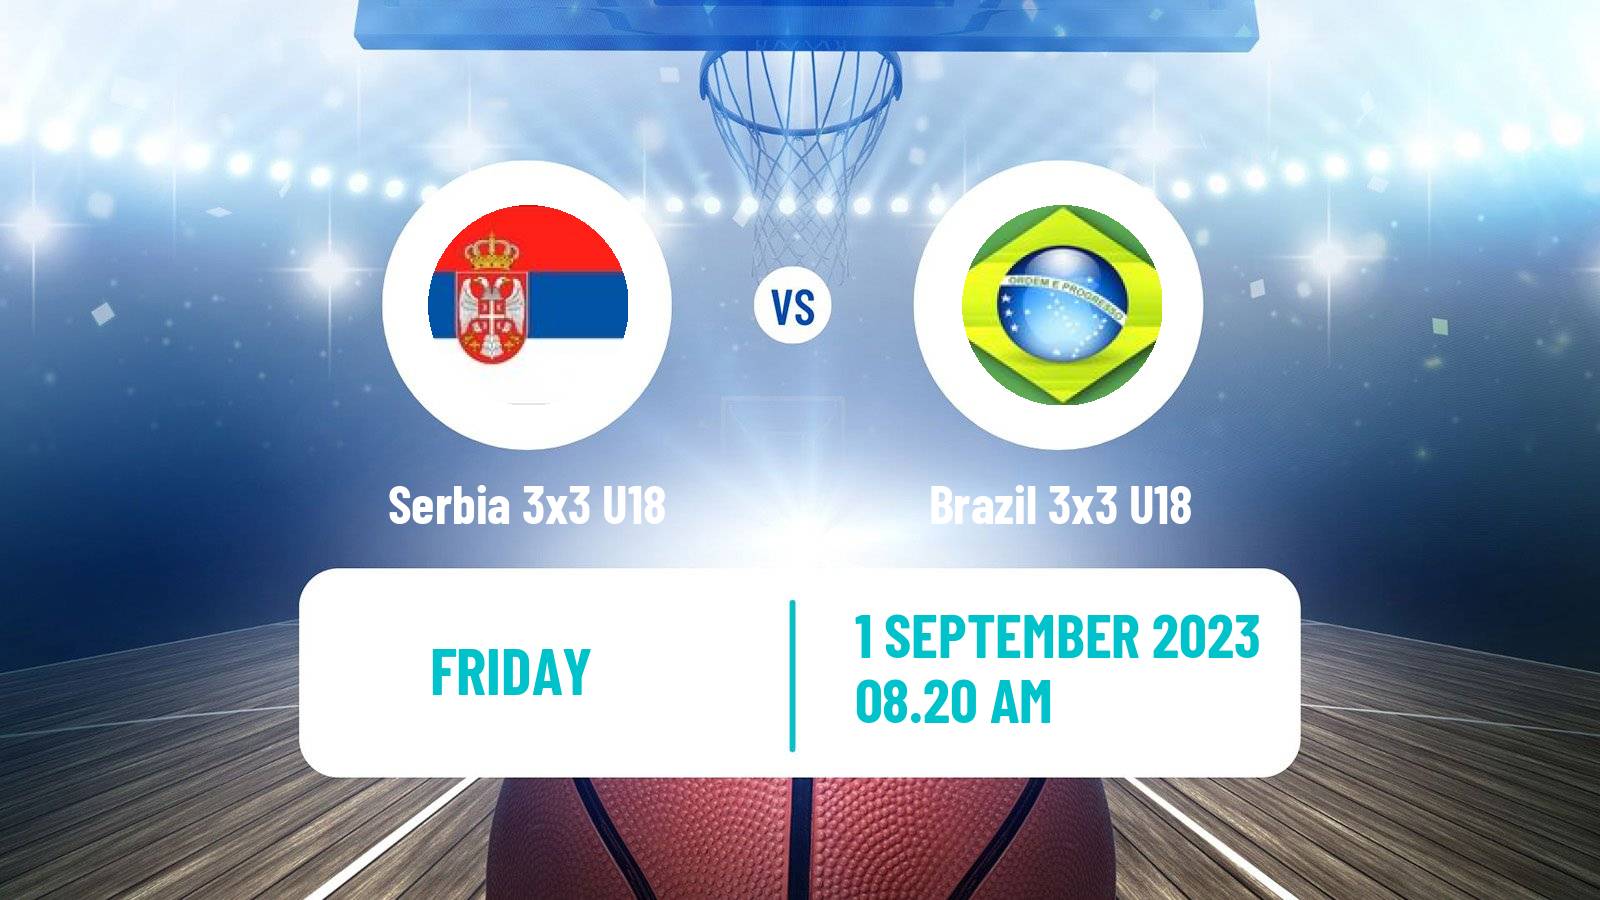 Basketball World Cup Basketball 3x3 U18 Serbia 3x3 U18 - Brazil 3x3 U18